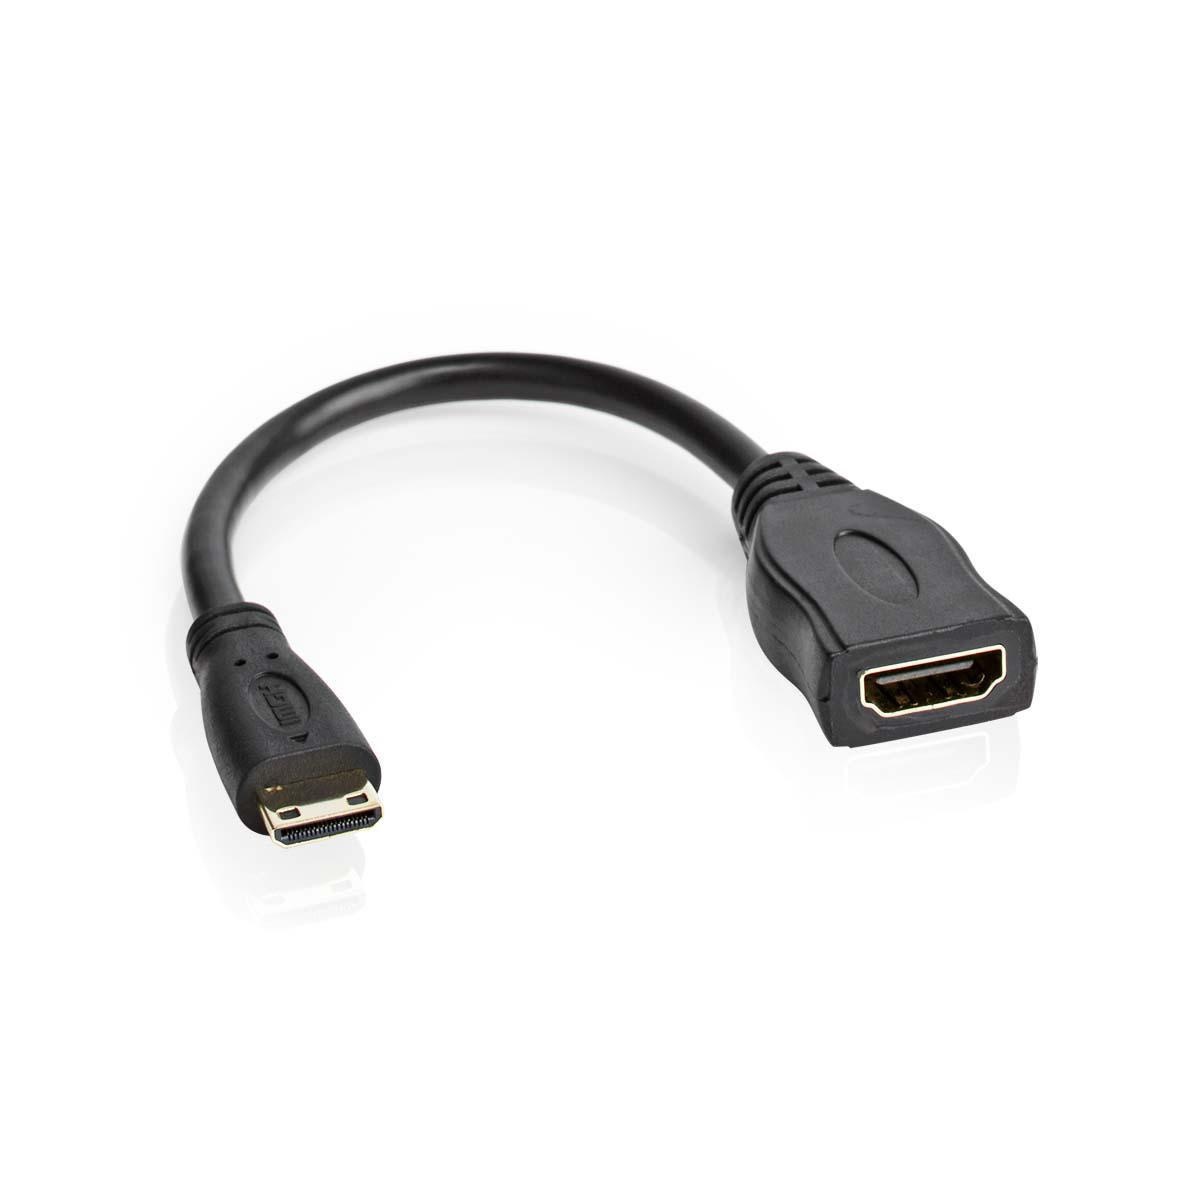 Câble convertisseur vidéo - HDMI -> Péritel - 720p/1080p@60Hz - 1,5 m -  Zwart